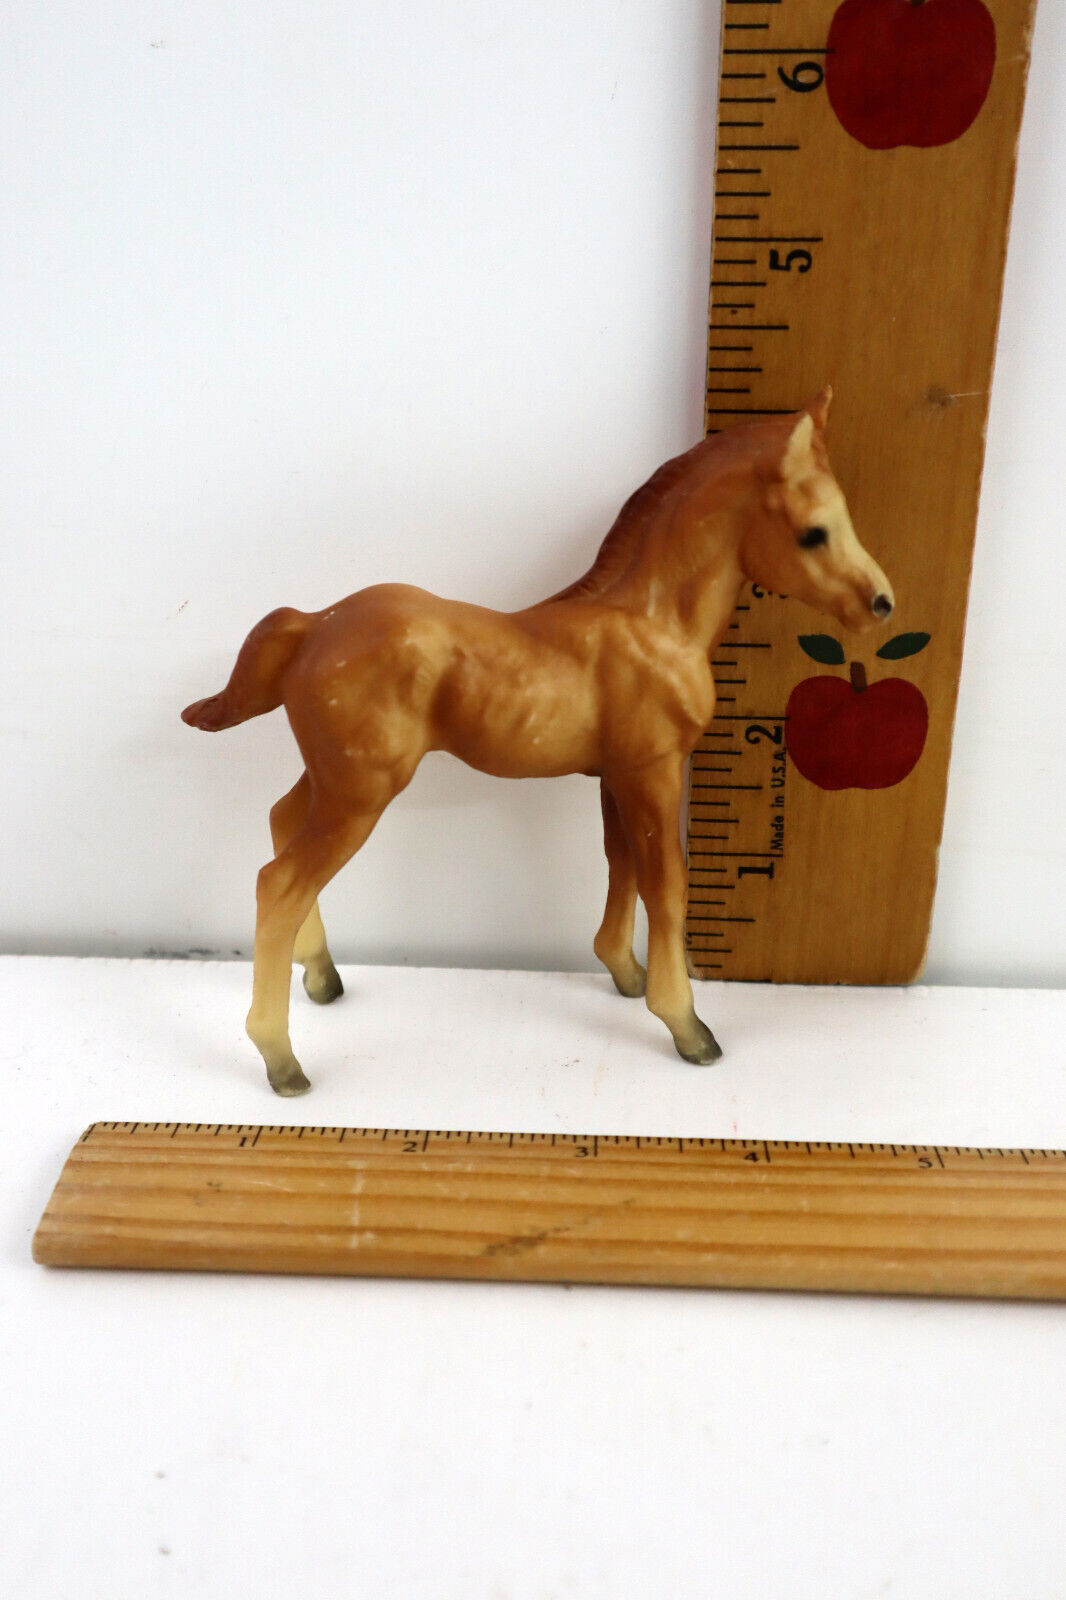 Breyer Mustang Foal Chestnut Model #3065 - No Mold Mark, early Model